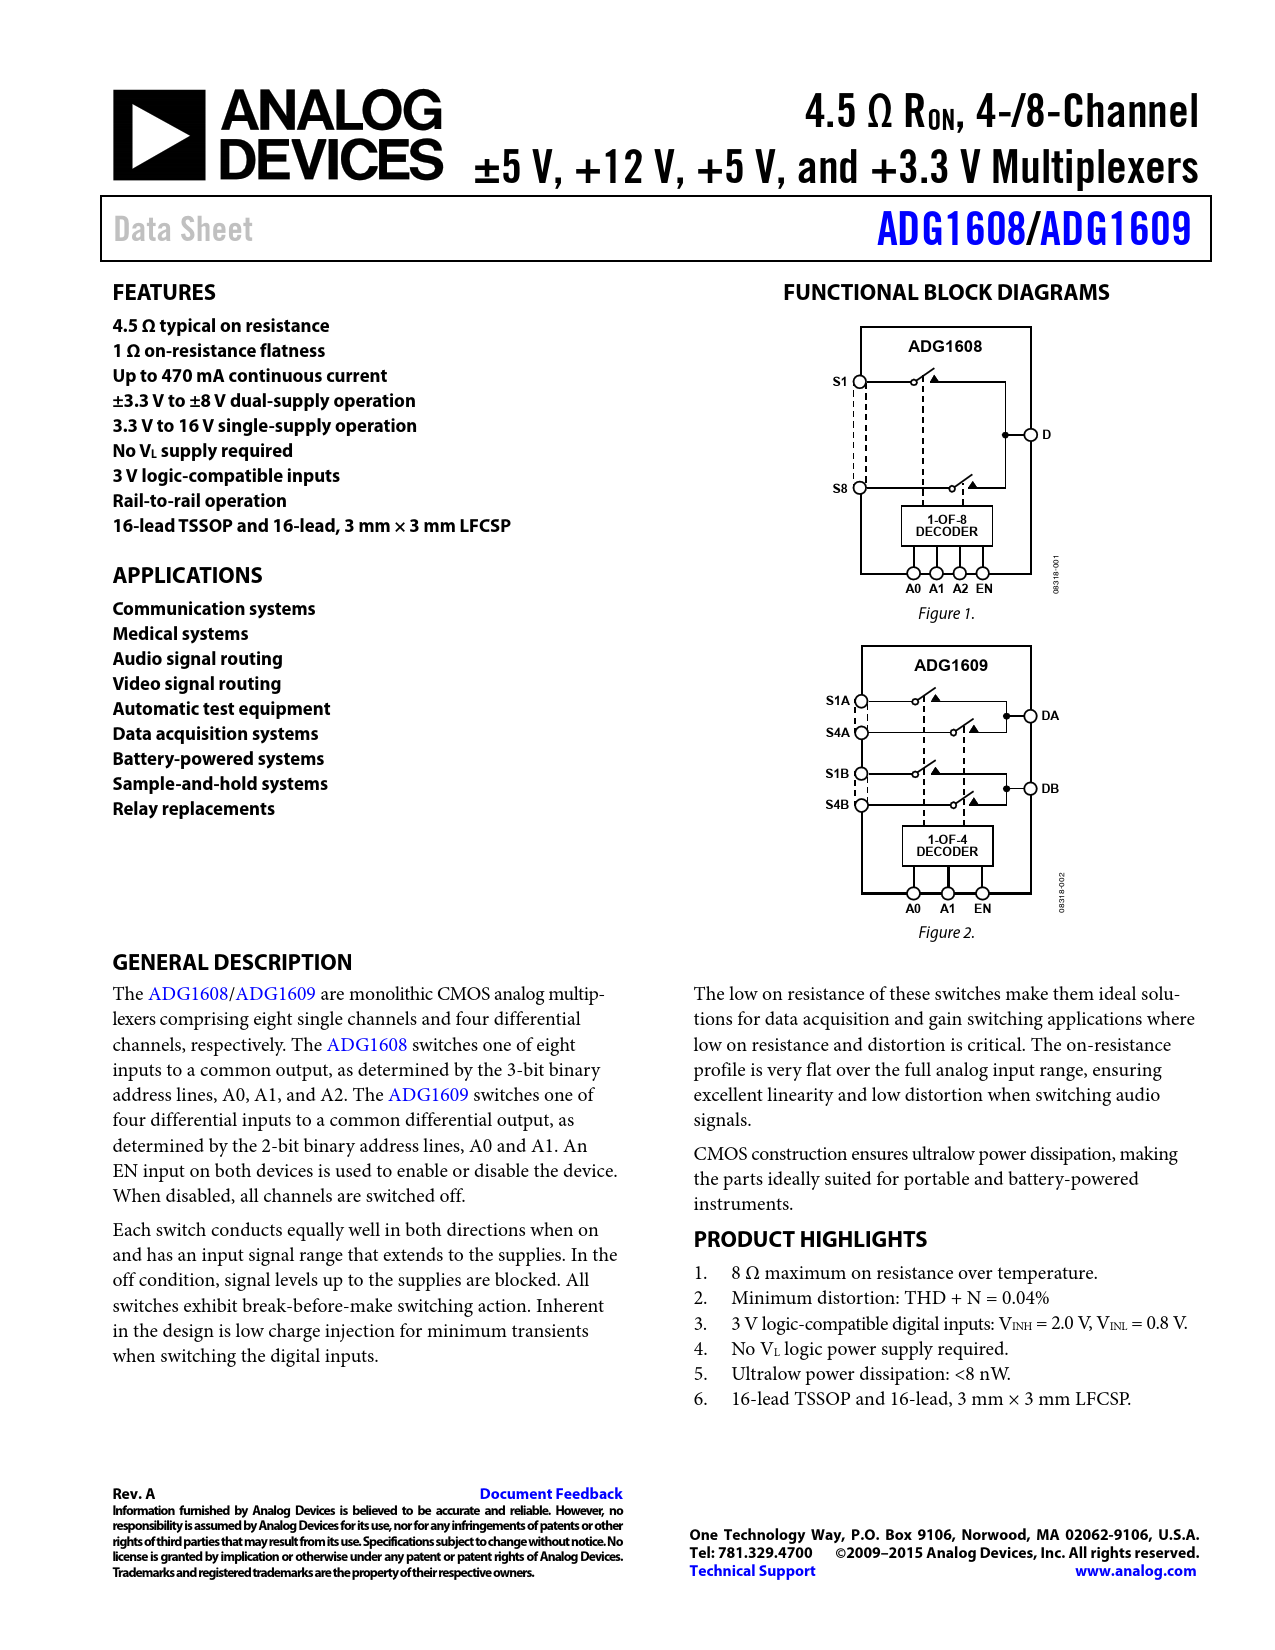 Datasheet ADG1608, ADG1609 Analog Devices, Версия: A